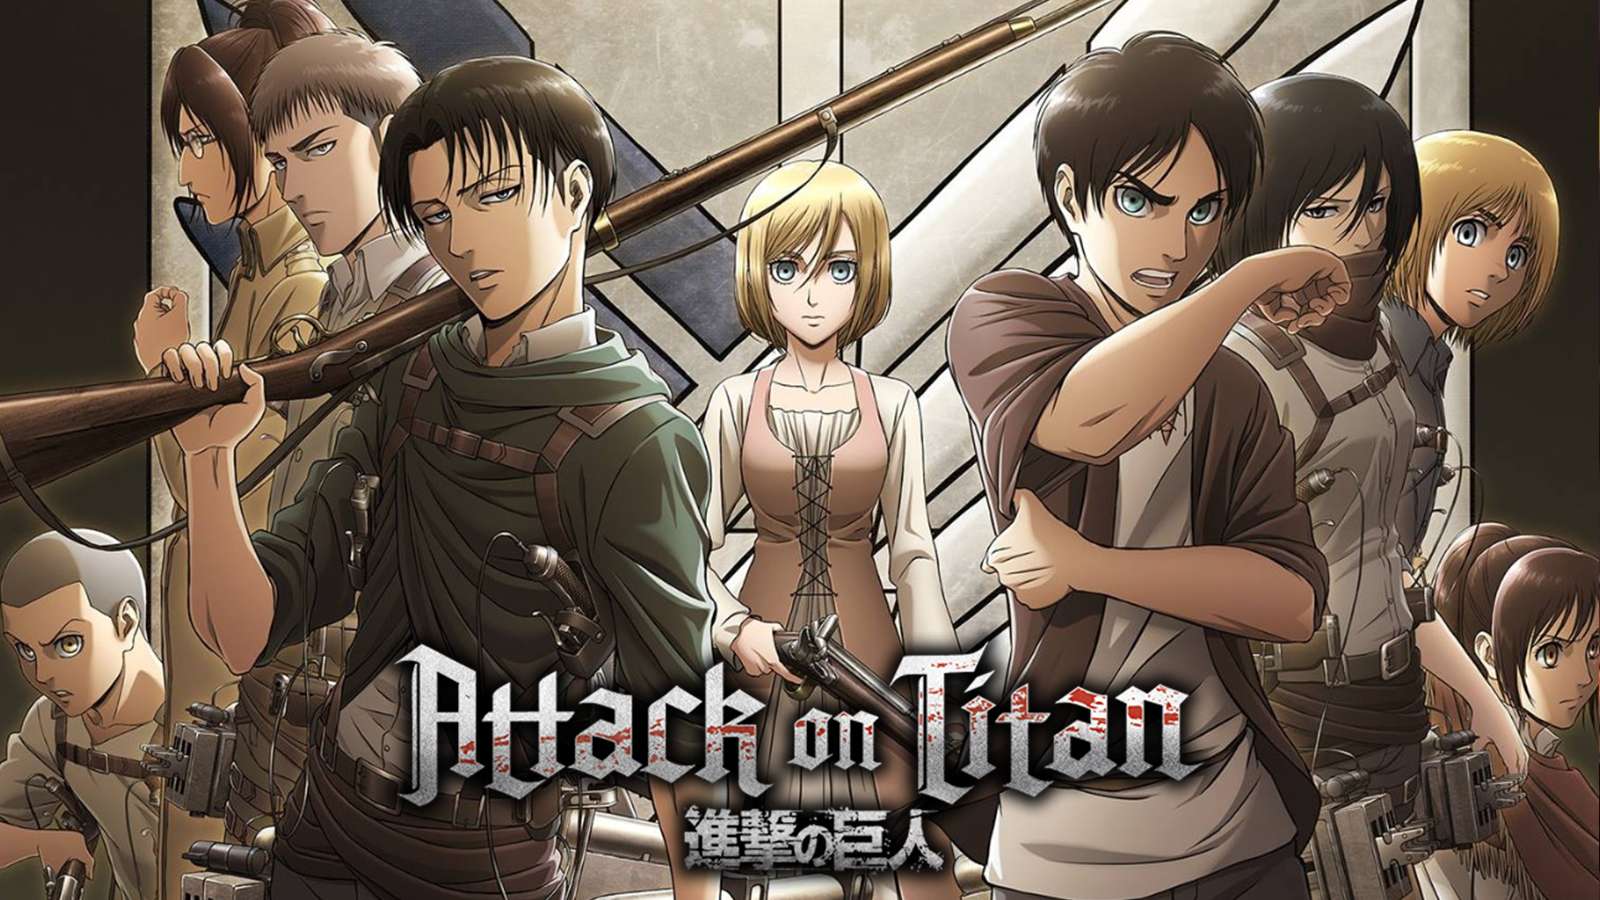 Attack on Titan season 4 trailer poster